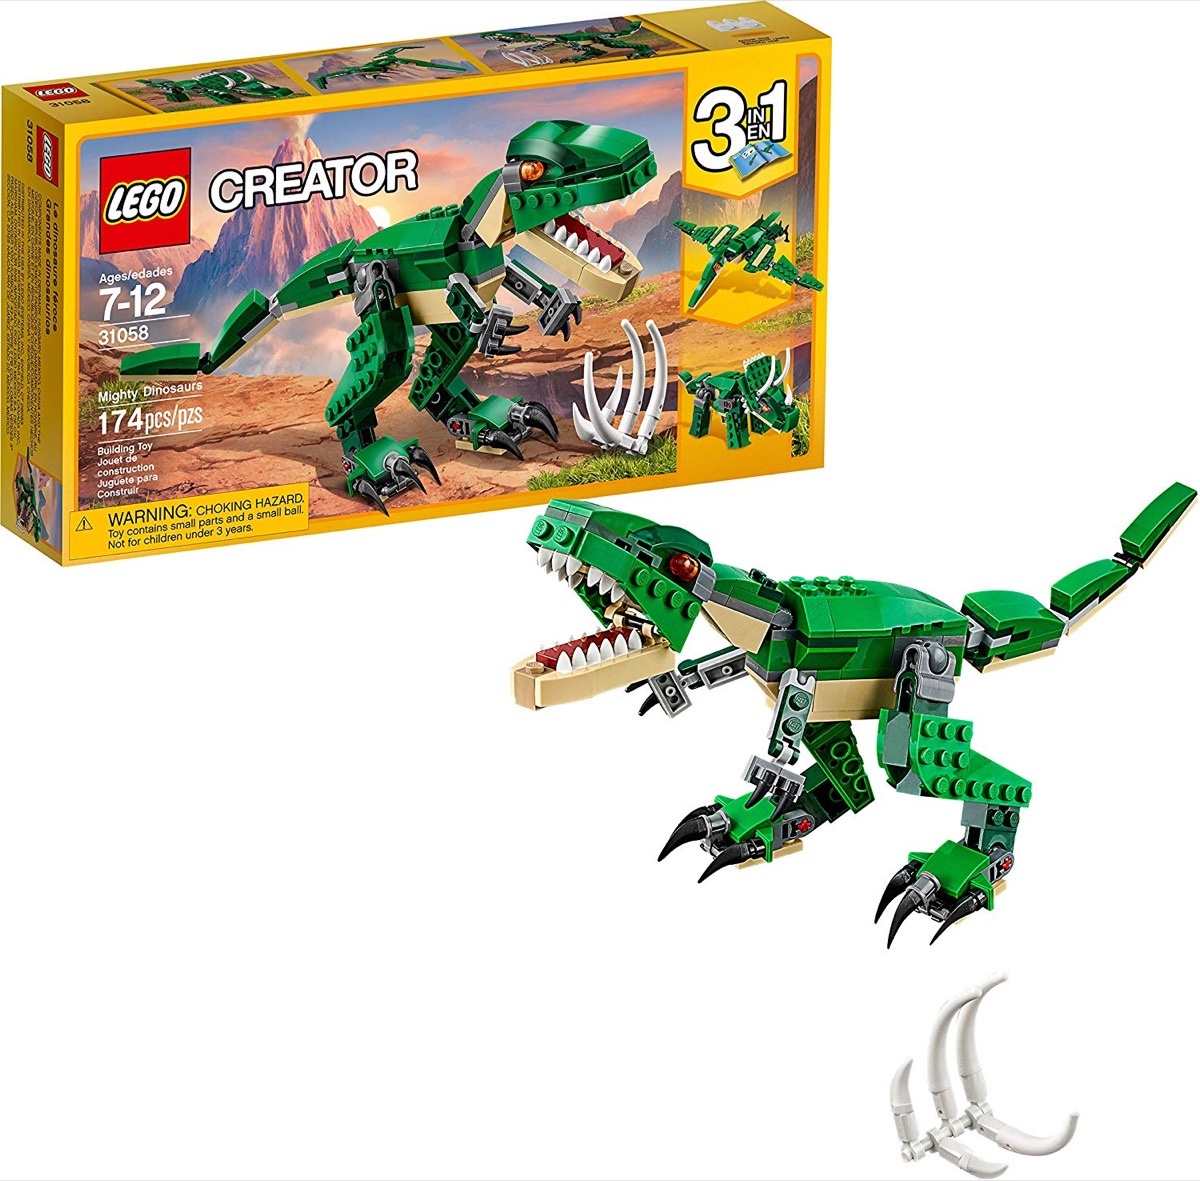 dinosaur lego set